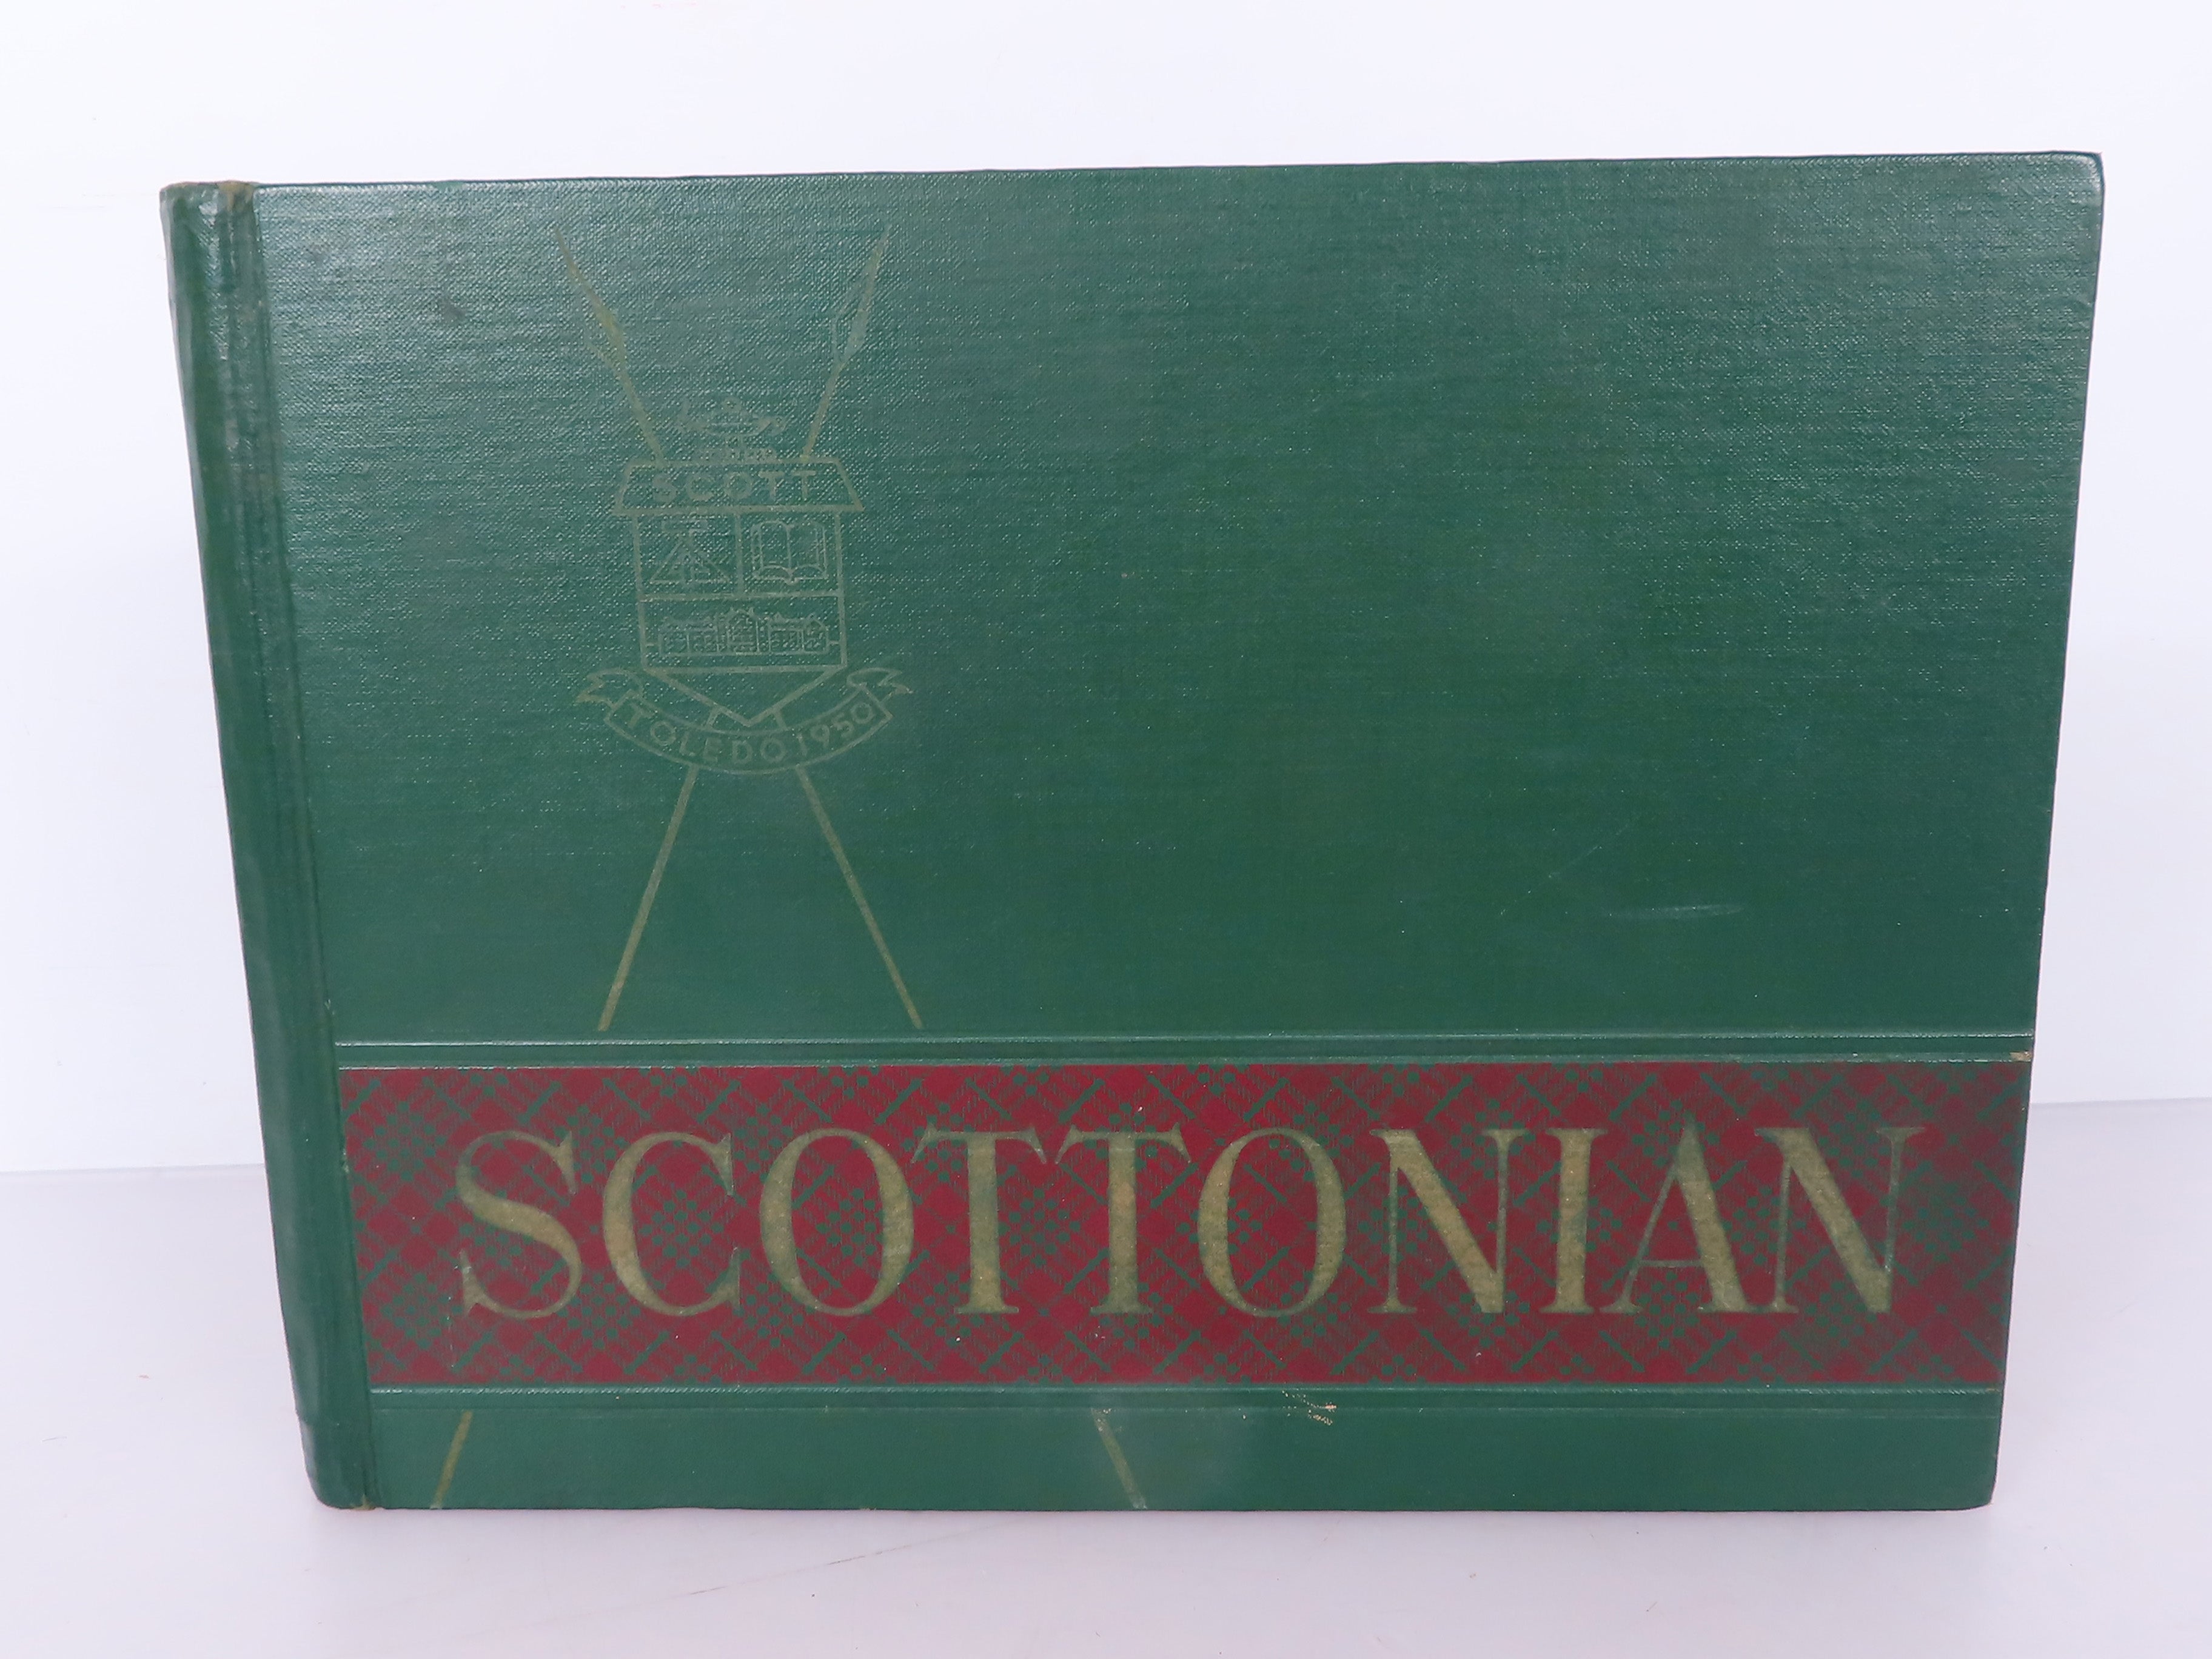 Scottonian 1950 Scott High School Yearbook Toledo, Ohio